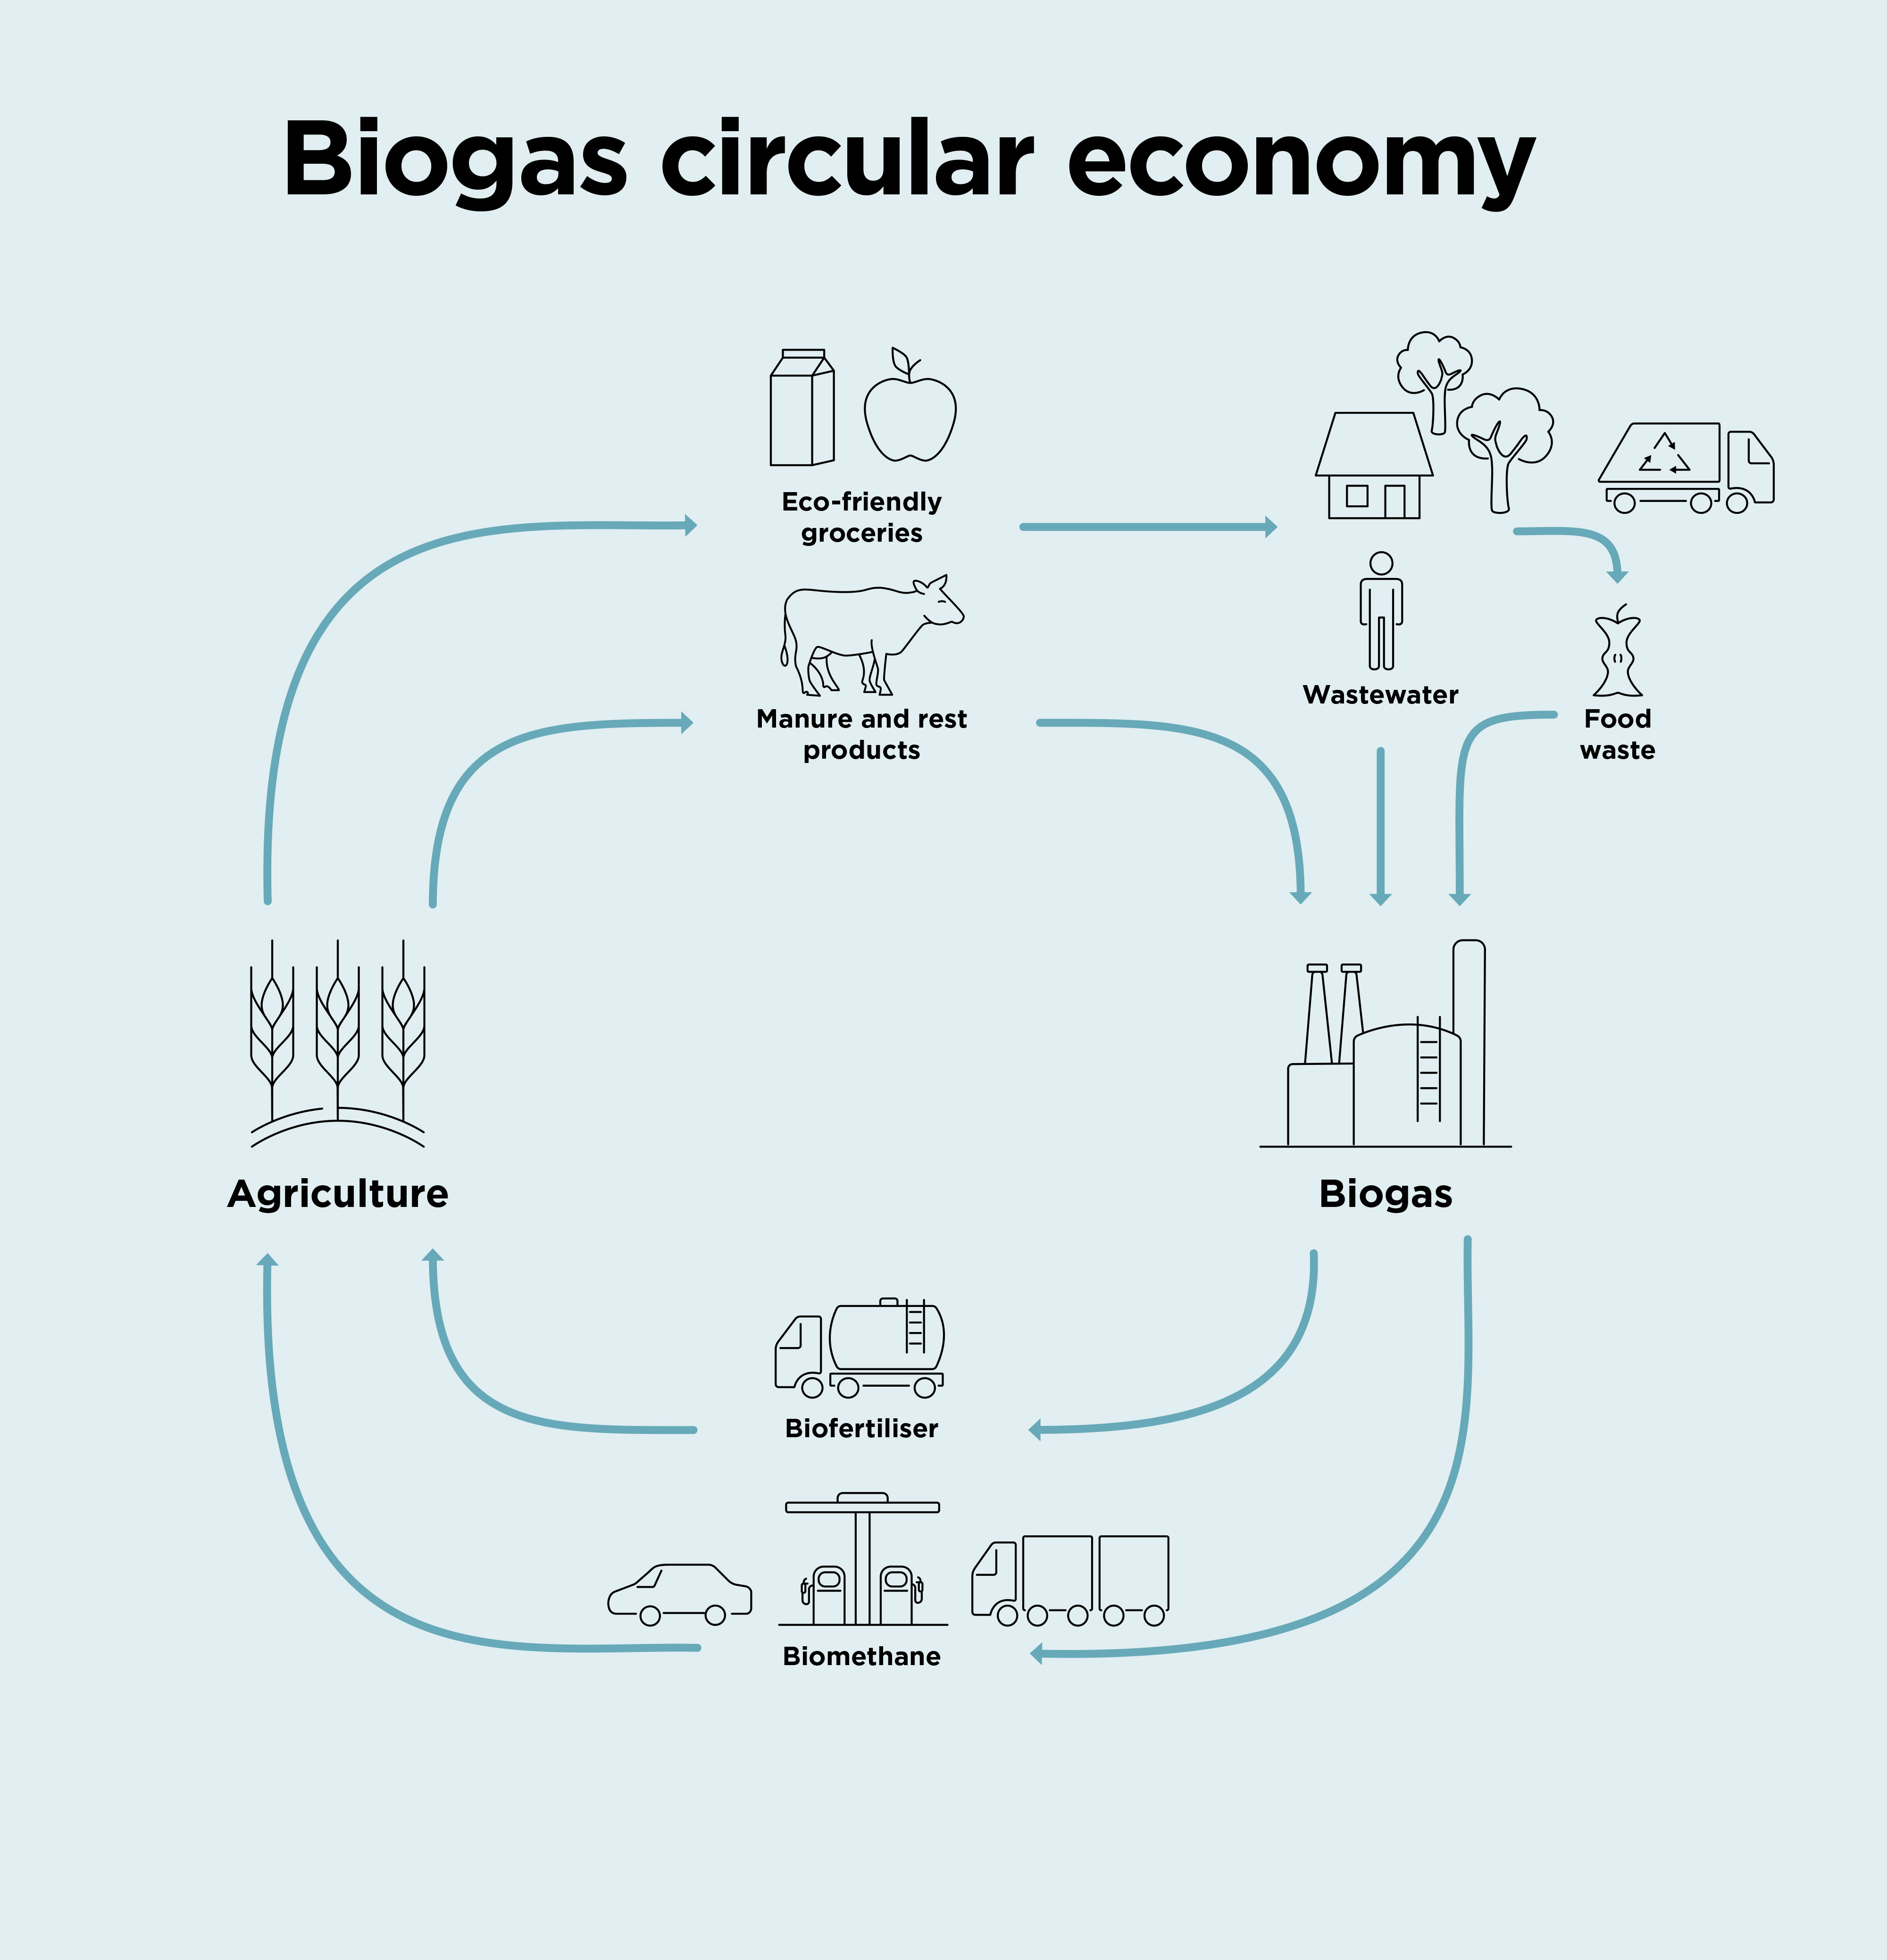 Biogas circular economy